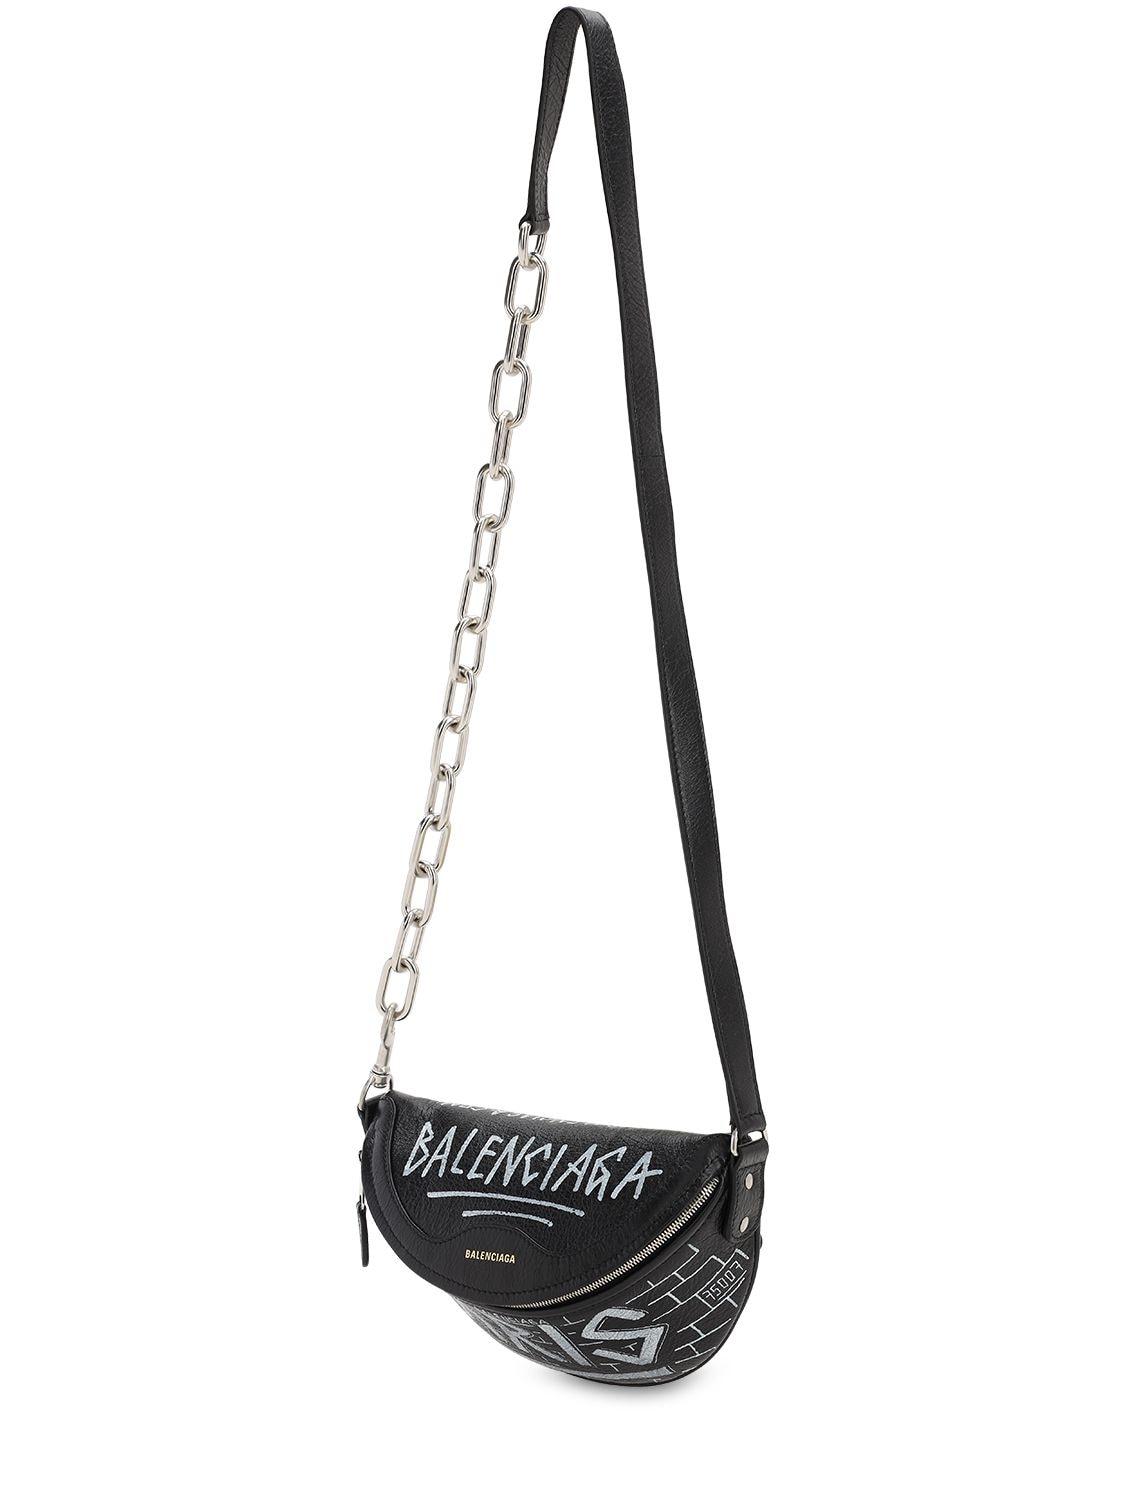 Balenciaga Xxs Souvenirs Graffiti Leather Belt Bag in Black | Lyst Canada